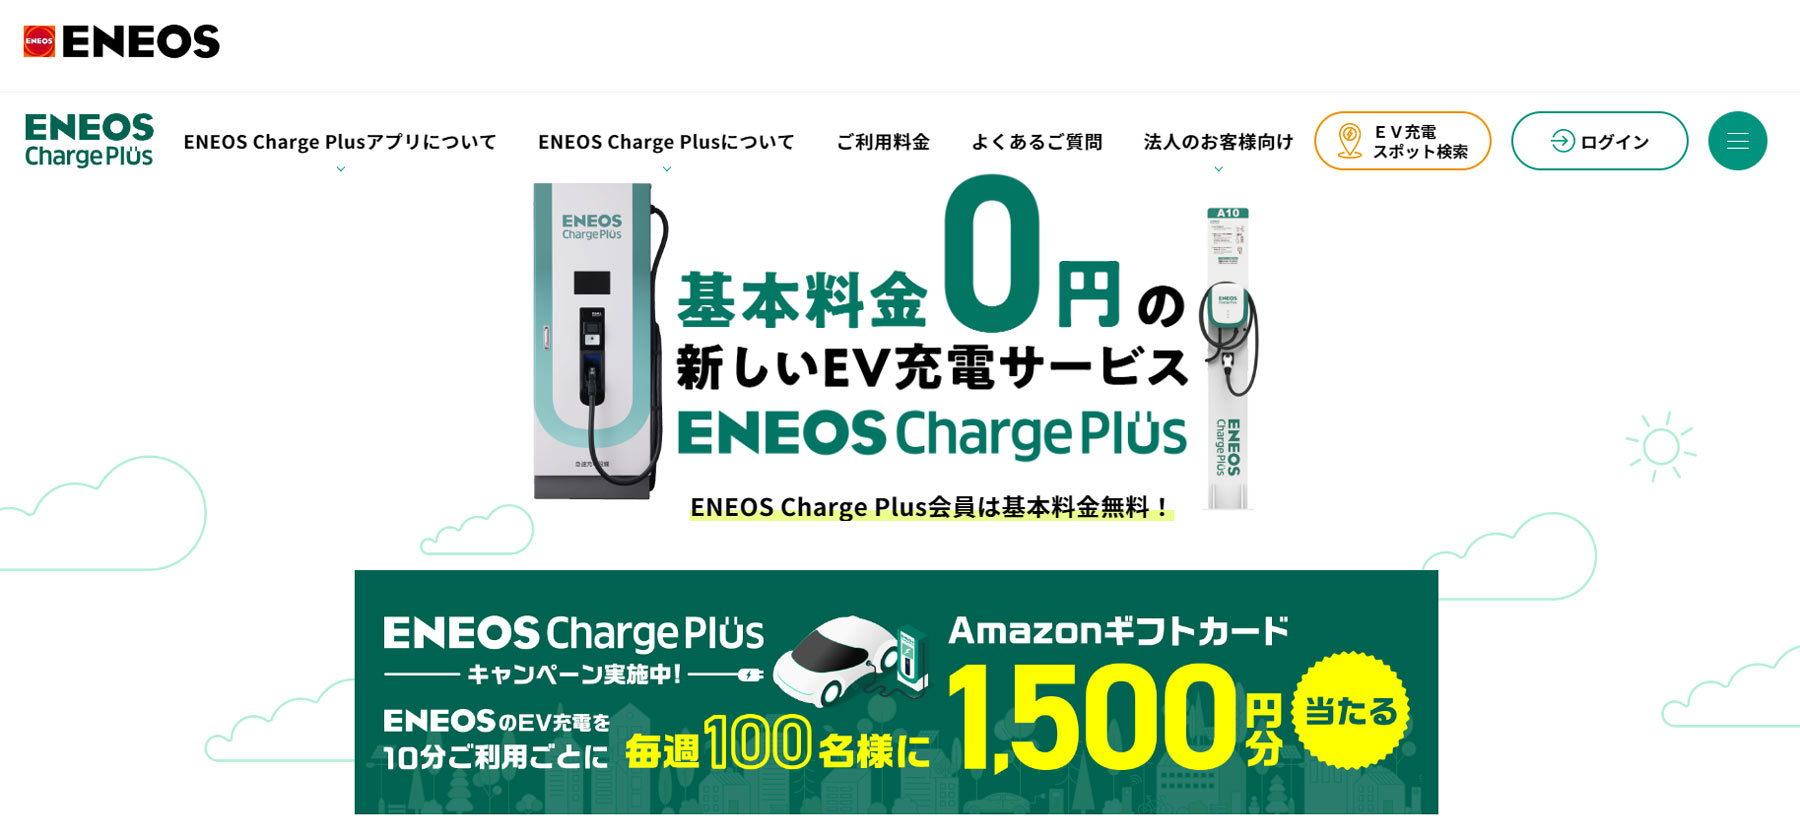 ENEOS Charge Plus公式Webサイト